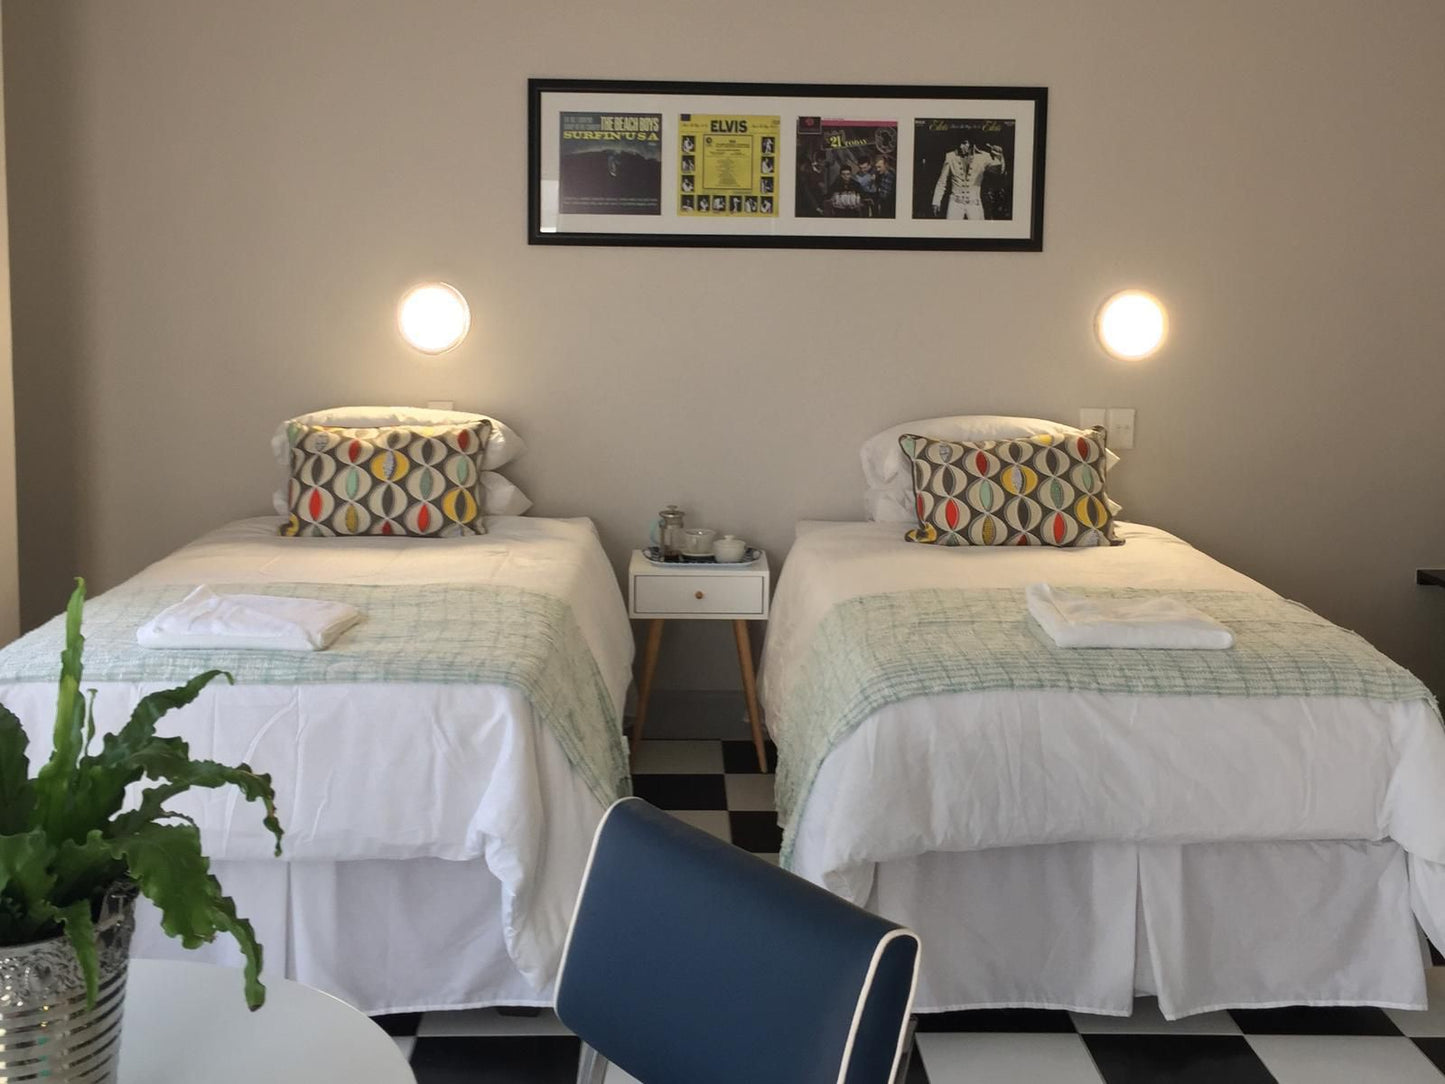 Hptwelve Accommodation Sonheuwel Central Nelspruit Mpumalanga South Africa Bedroom